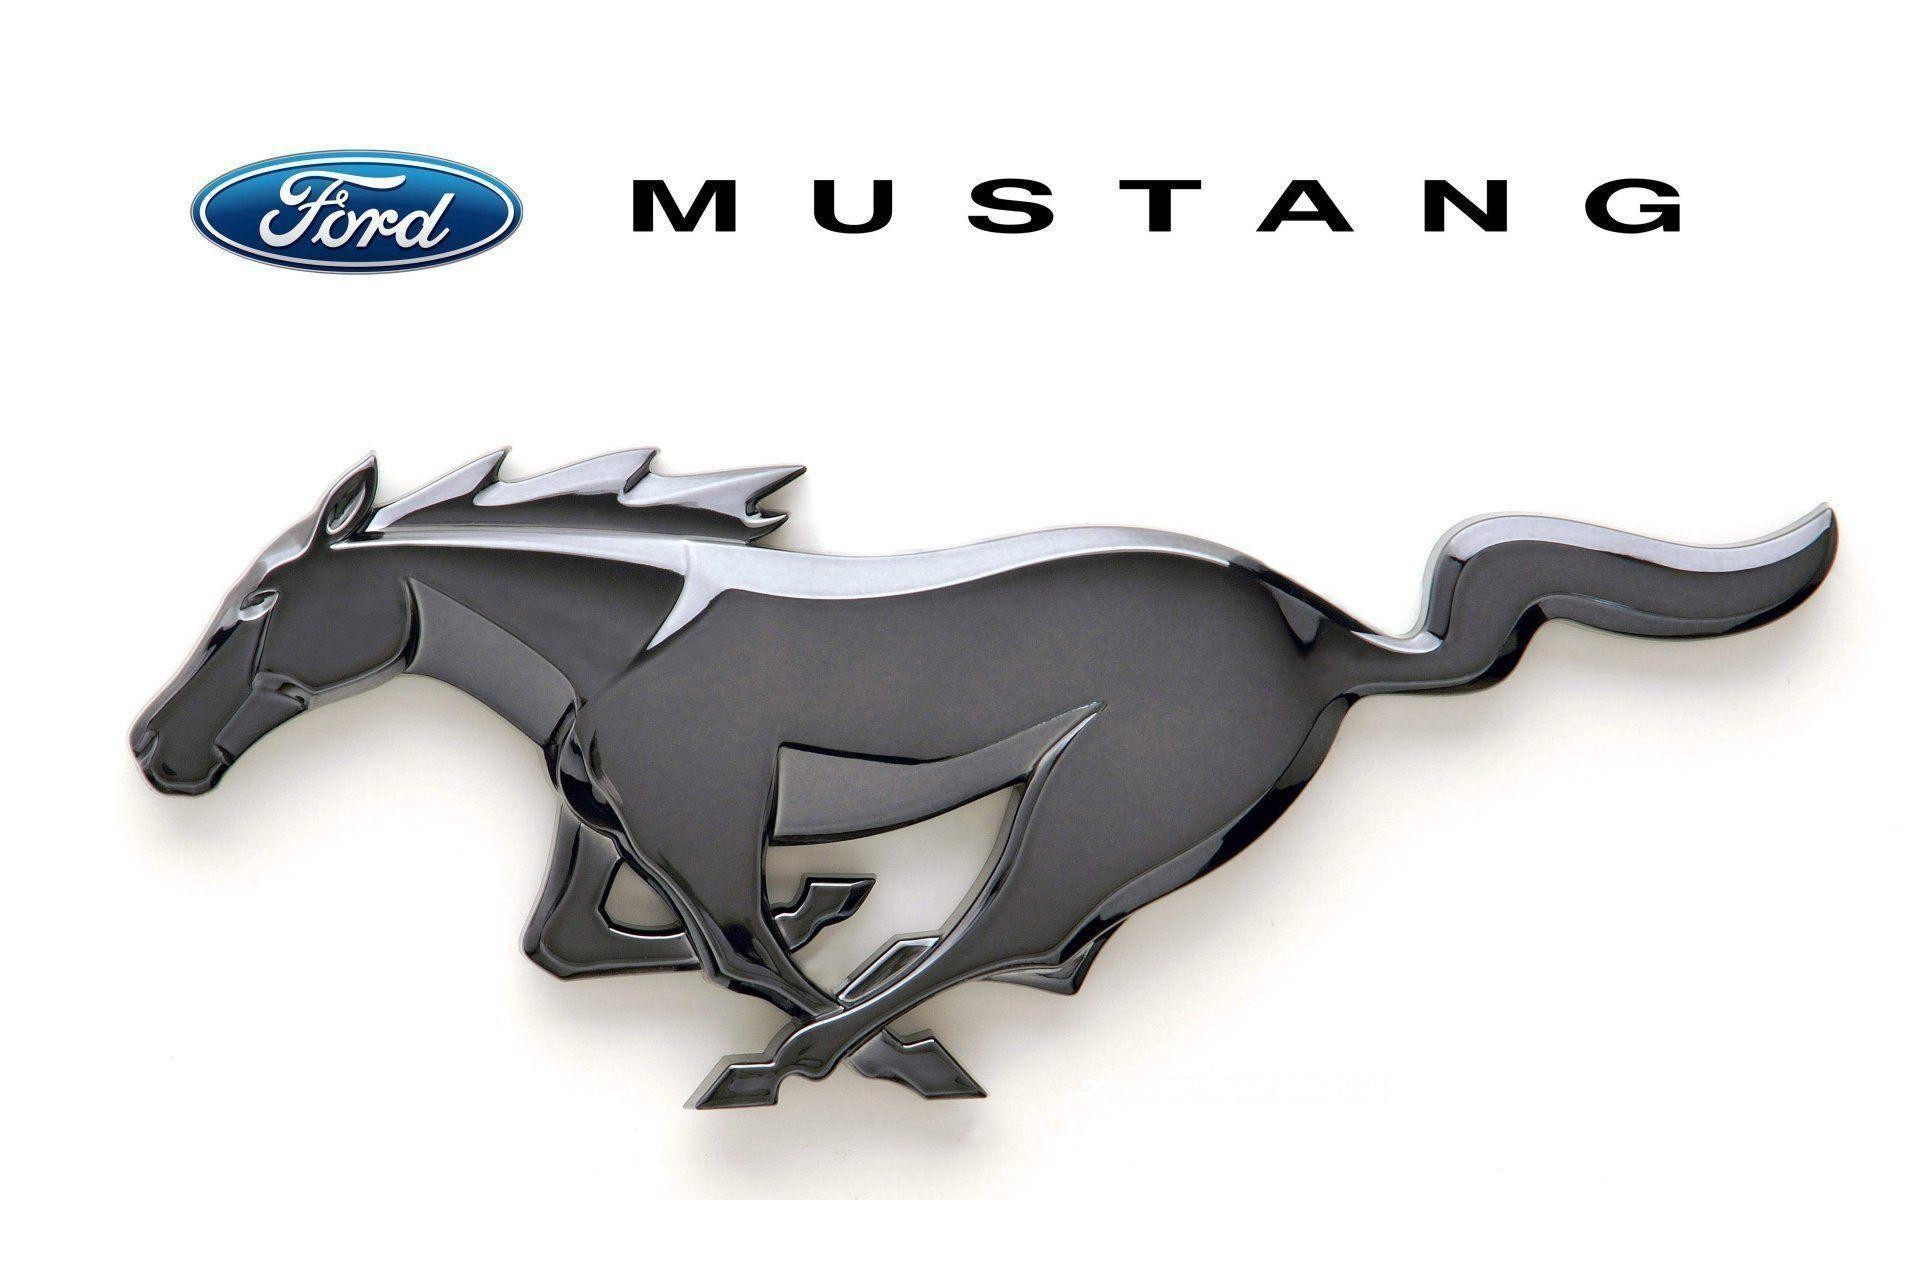 1920x1280 Logos For > Ford Mustang Logo Wallpaper Hd